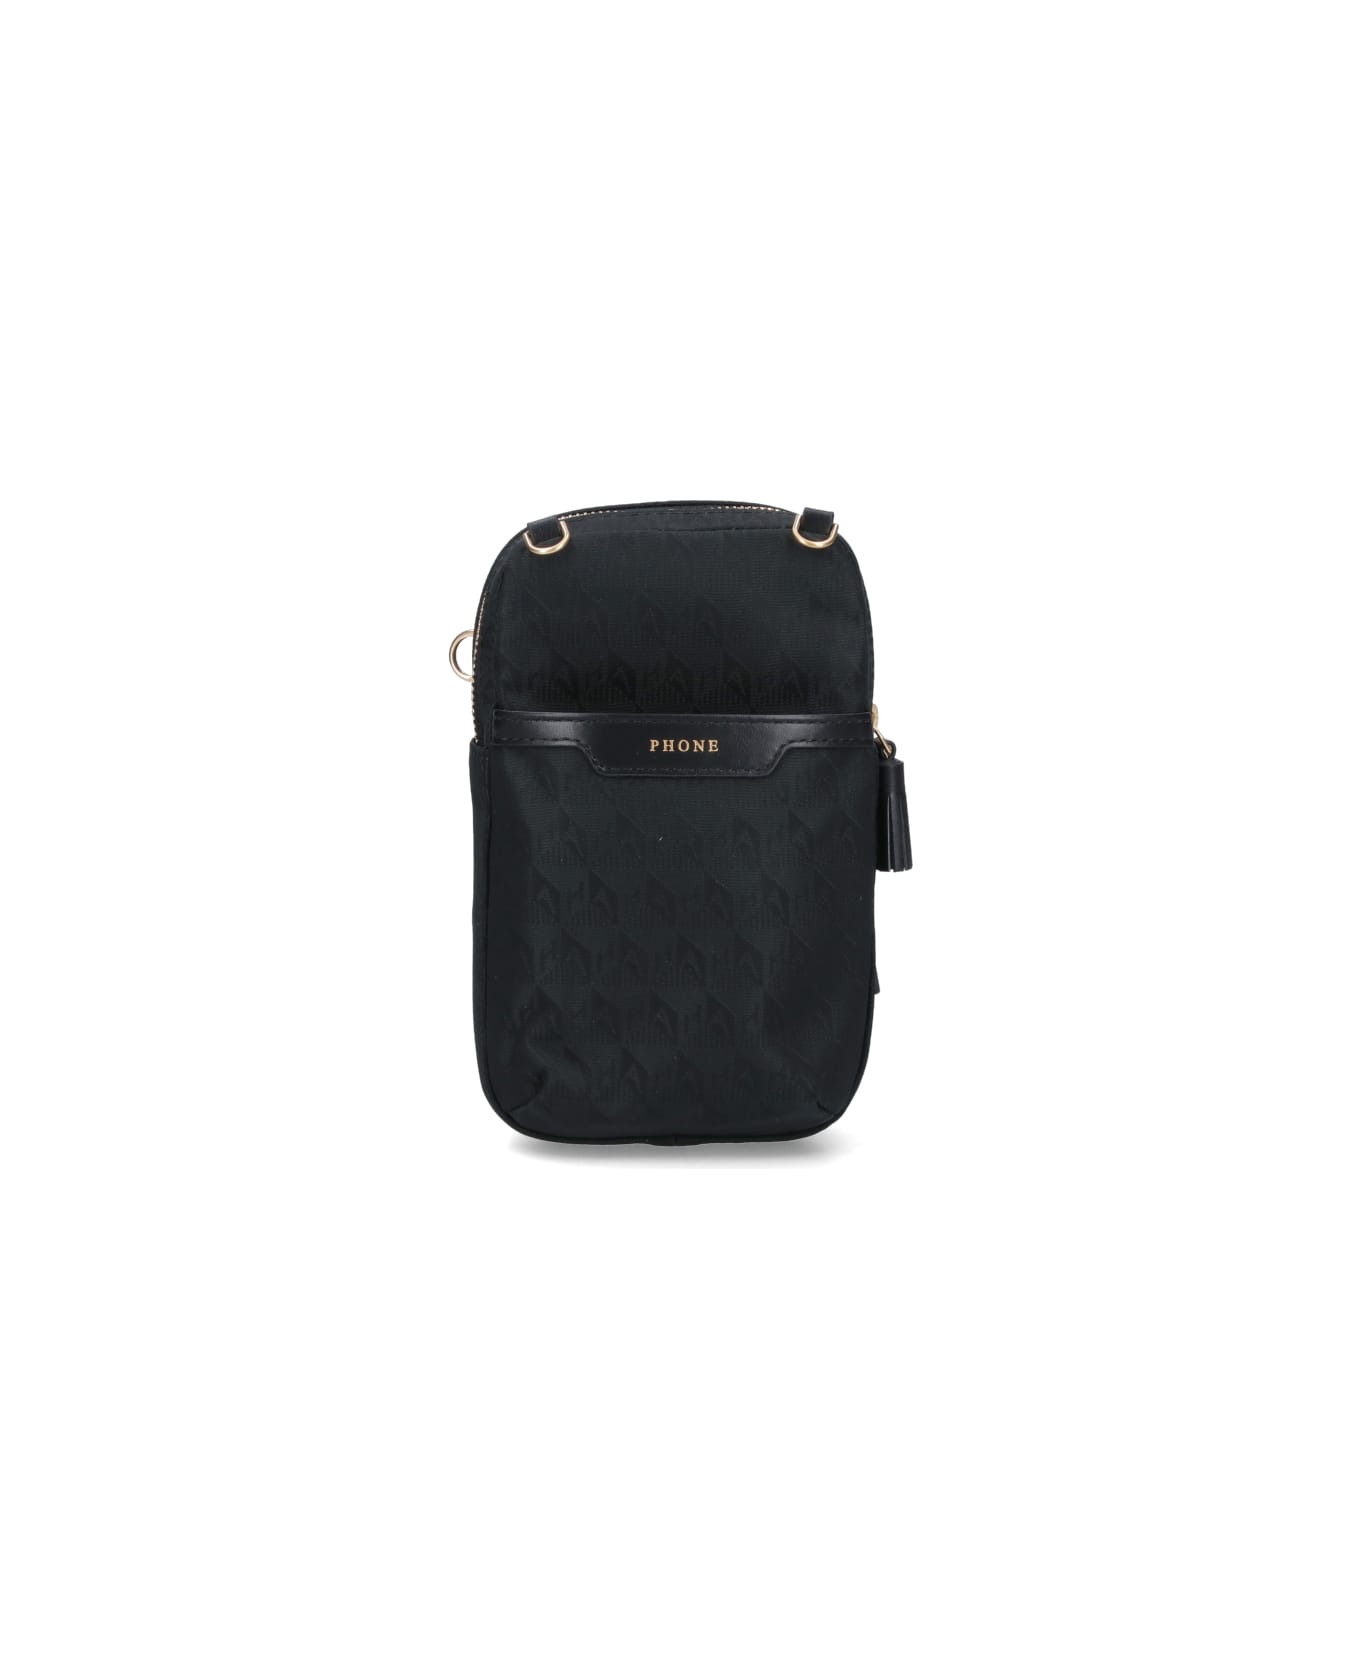 Anya Hindmarch 'logo Essentials' Shoulder Bag - Black  